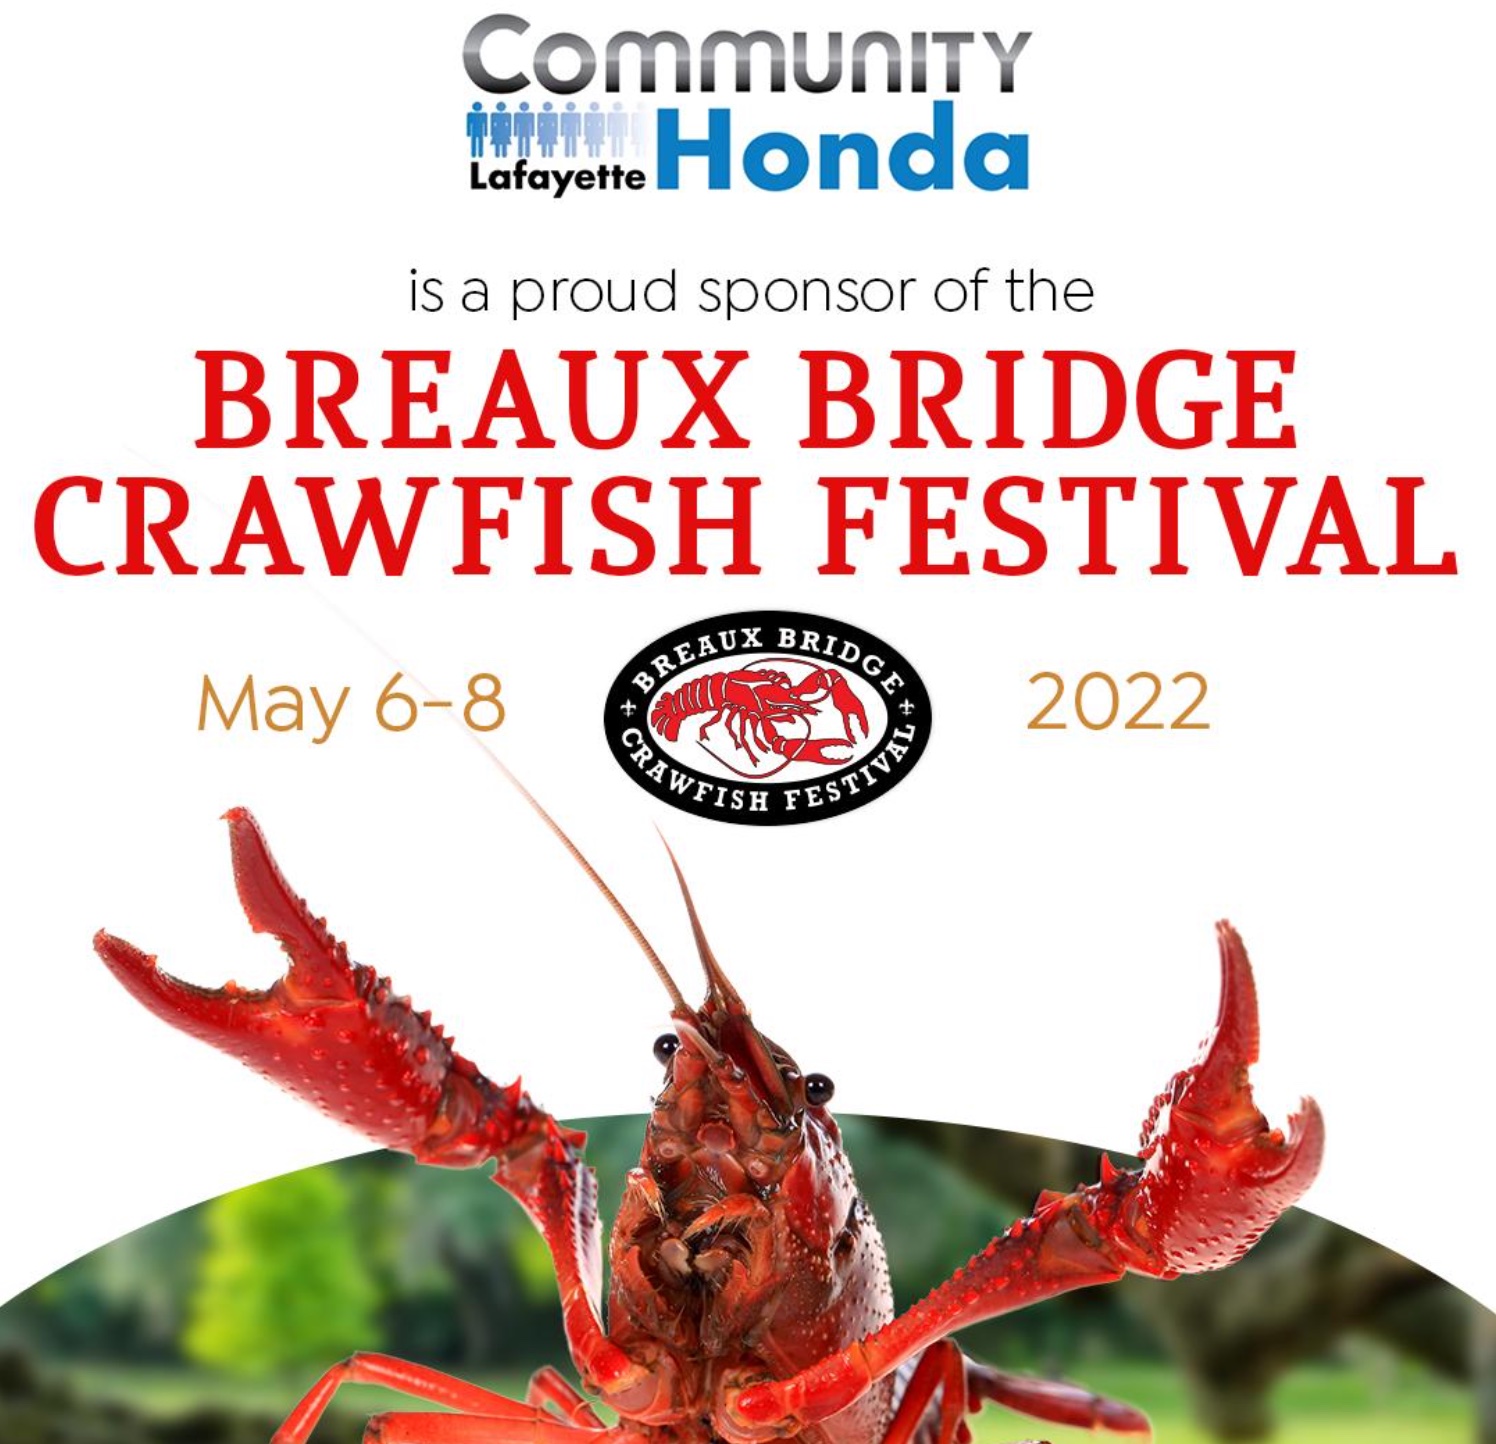 Breaux Bridge Crawfish Festival Community Honda Lafayette